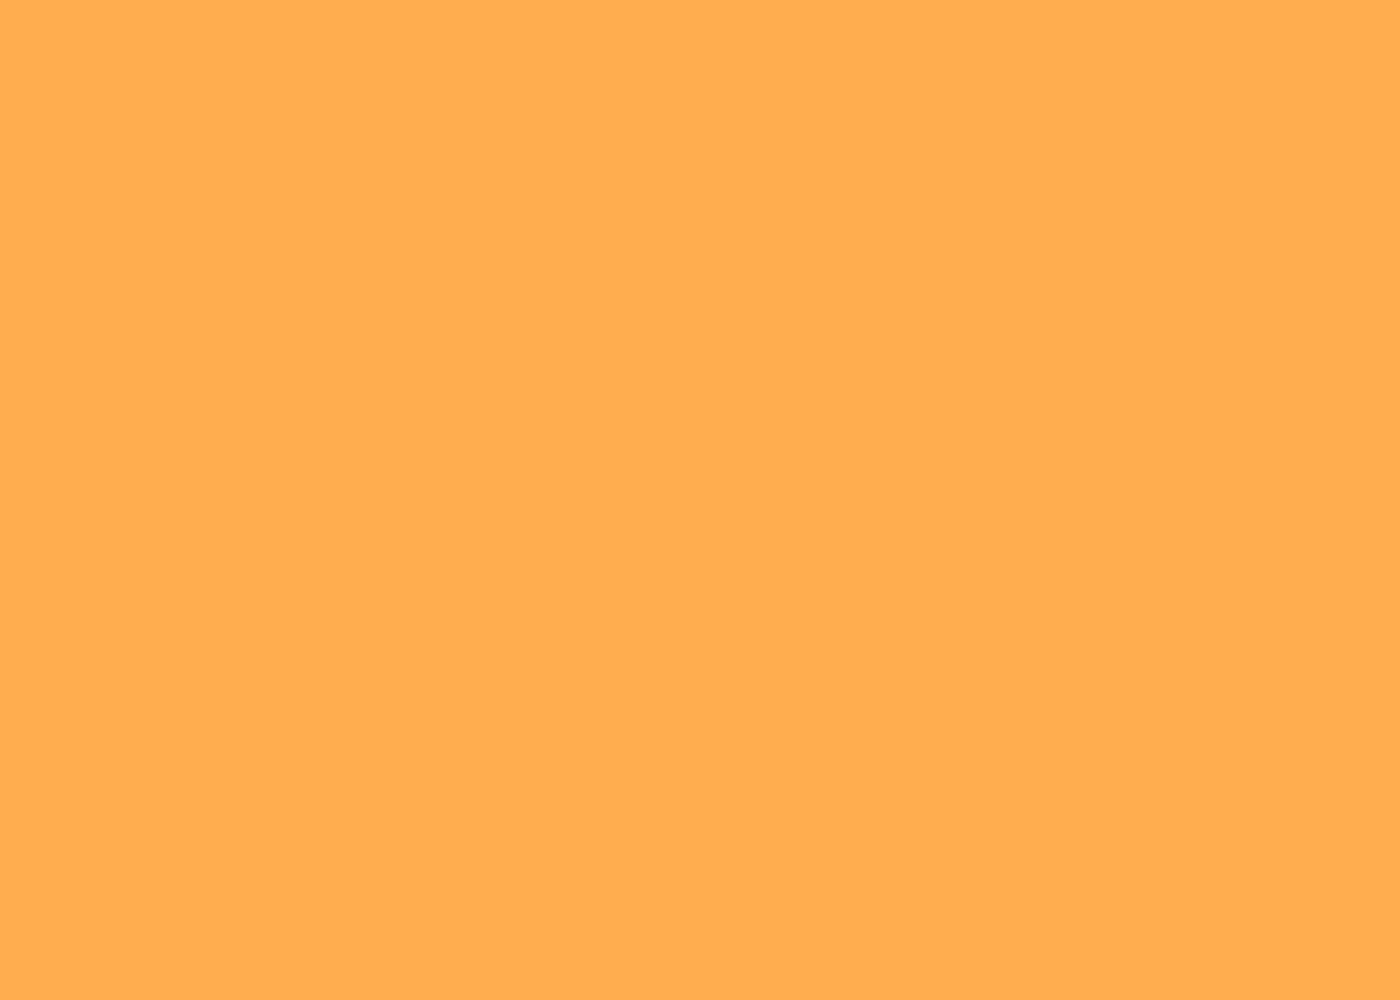 Image may contain: orange, screenshot and yellow